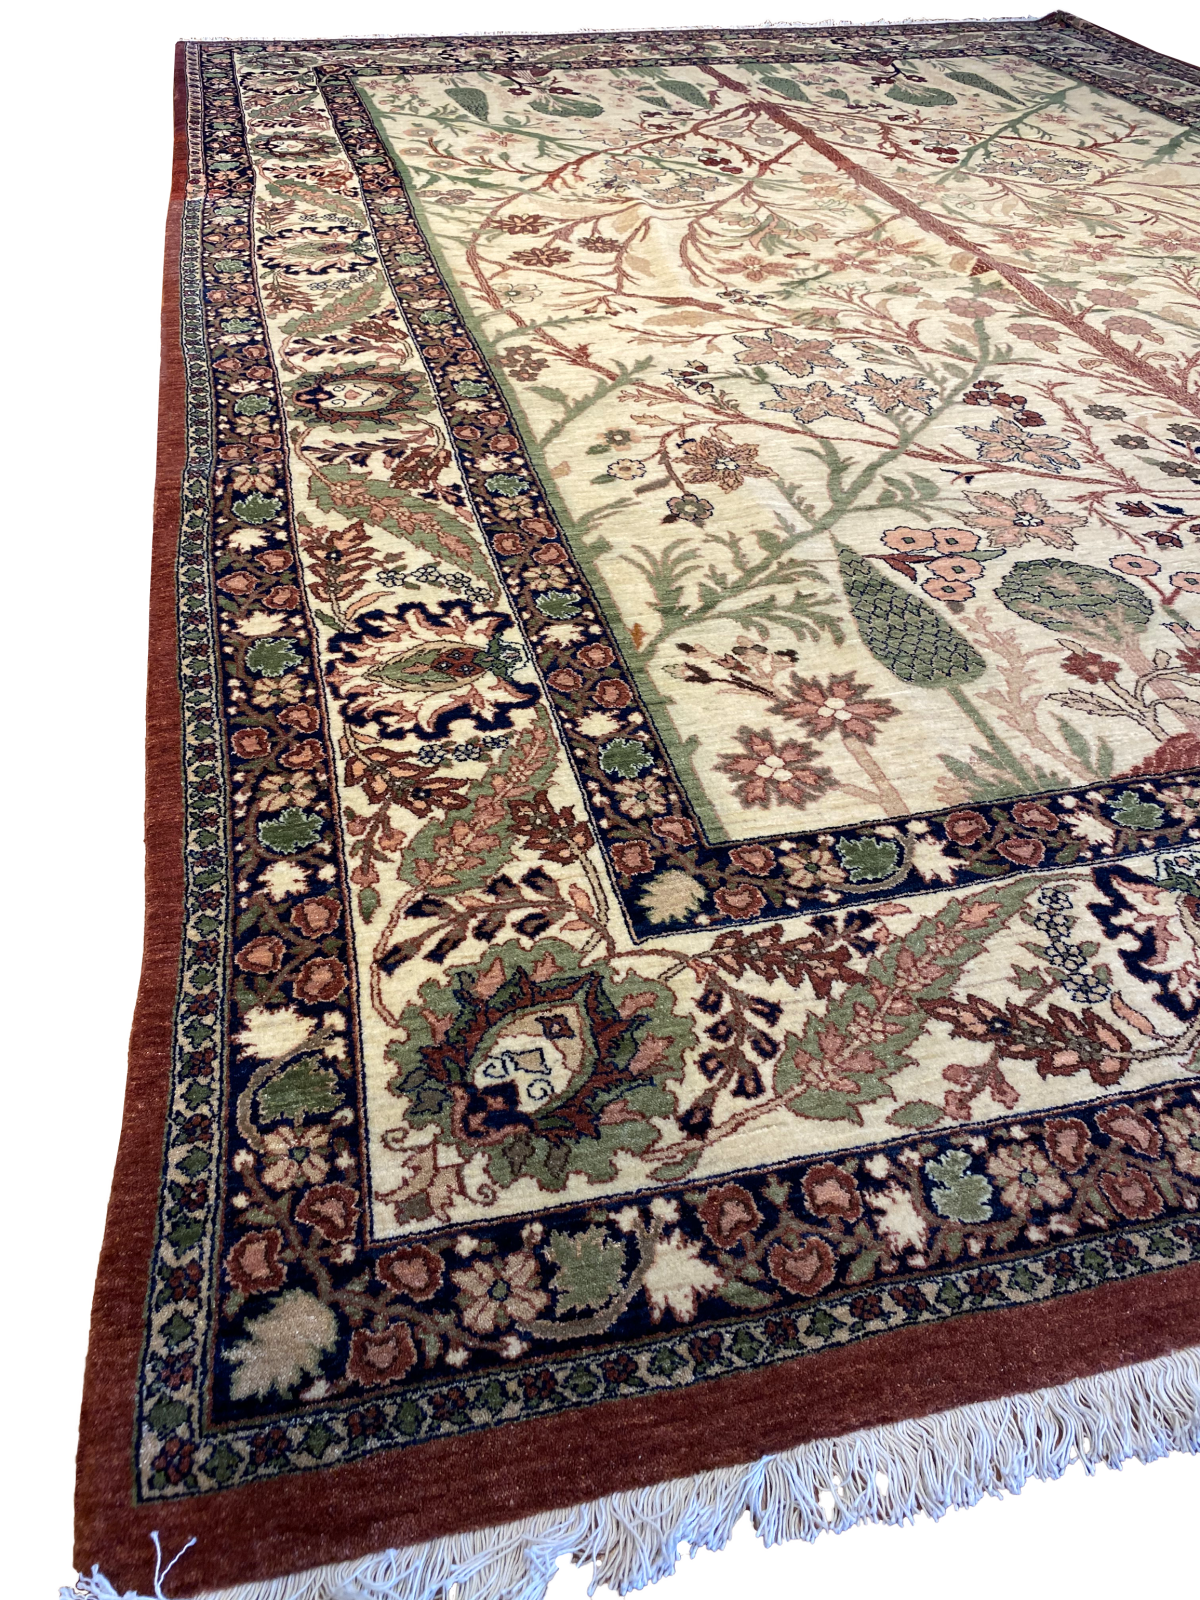 Persian Haji Jalili Tabriz 9' 3" x 12' 8" Wool Handmade Area Rug - Shabahang Royal Carpet